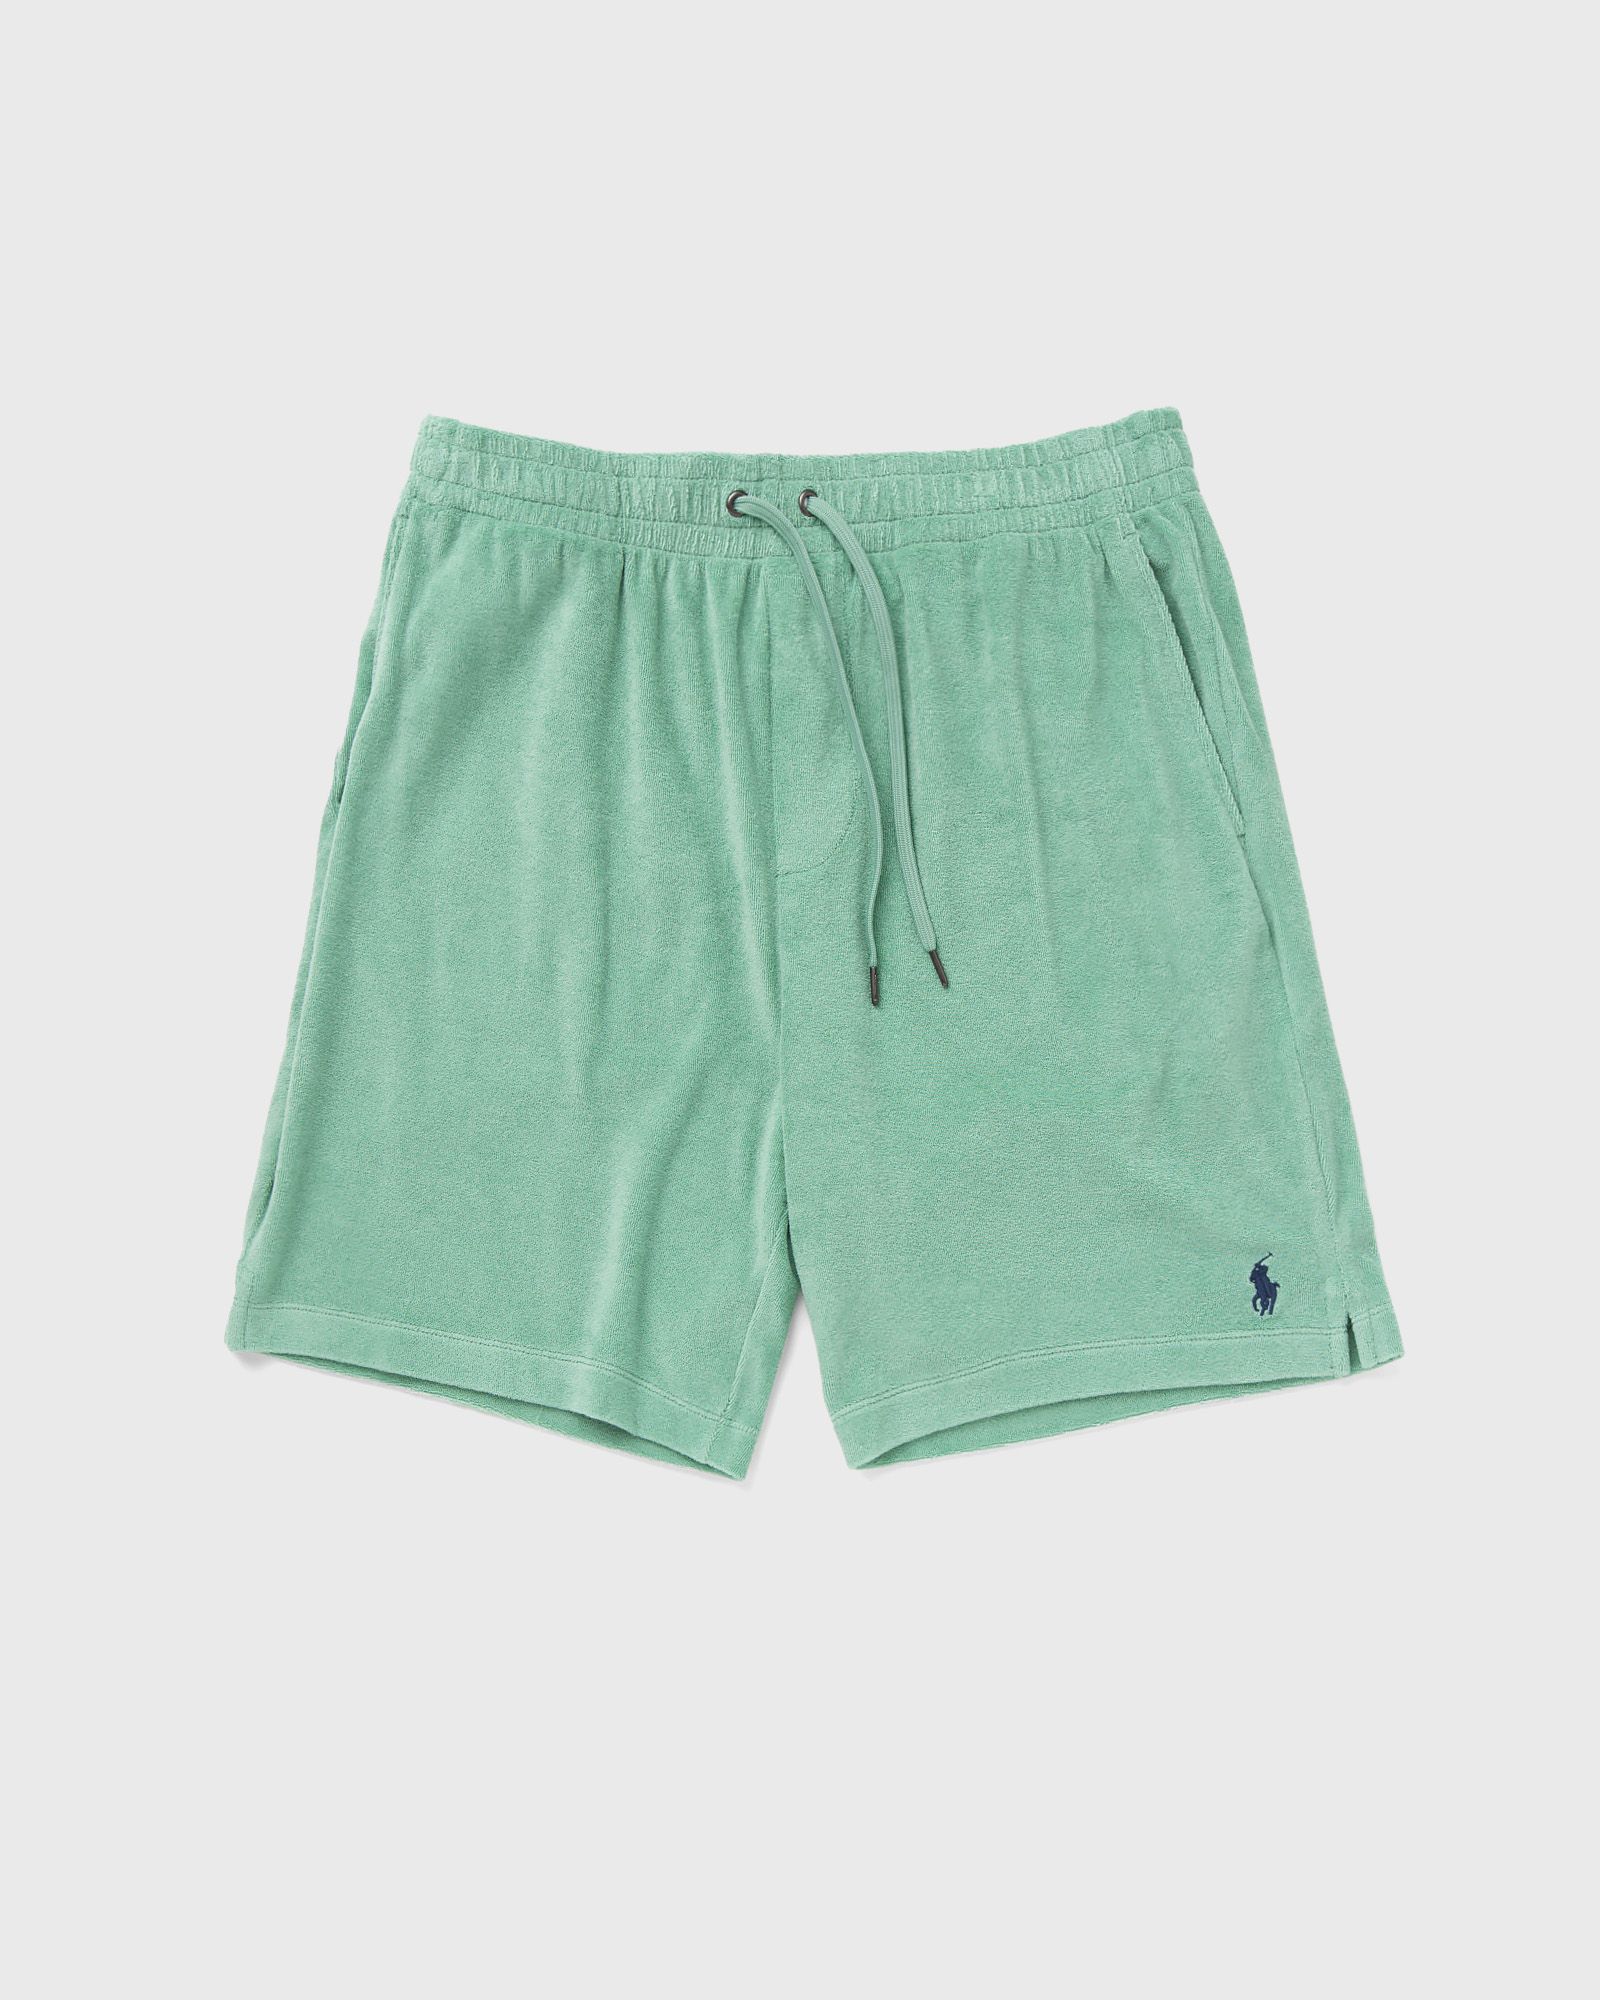 Polo Ralph Lauren - athletic shorts men casual shorts green in größe:xl